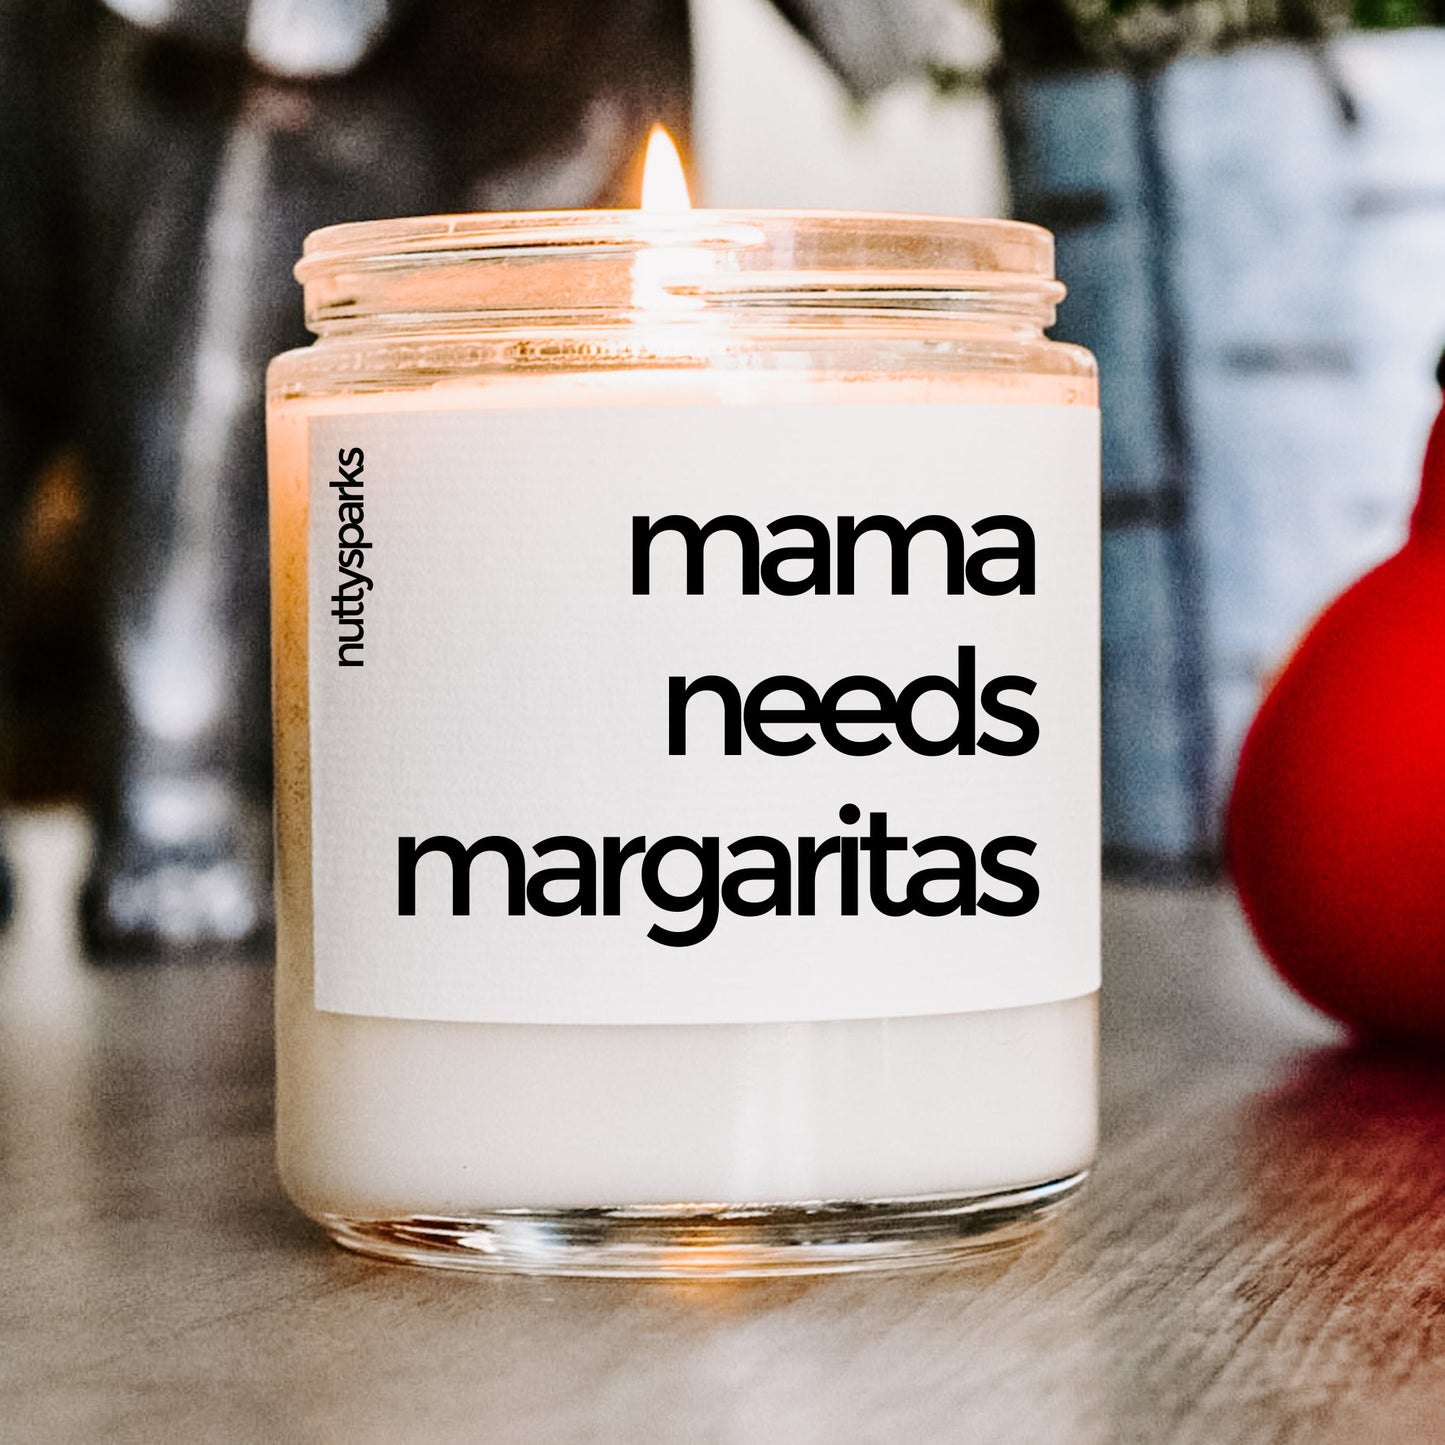 mamma needs margaritas